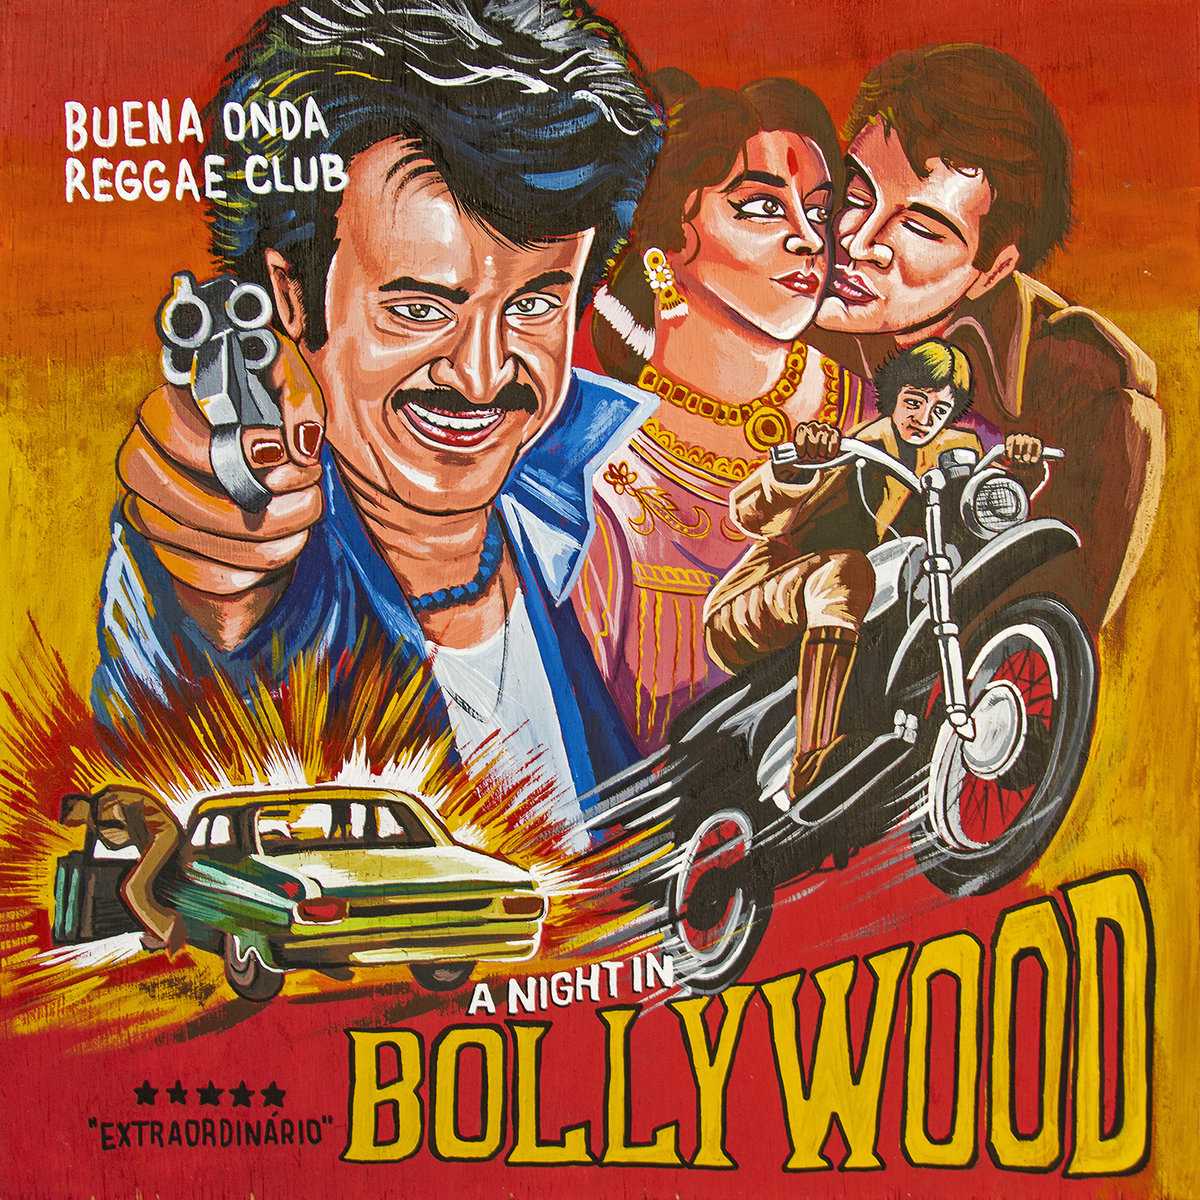 Capa do disco "A Night in Bollywood"